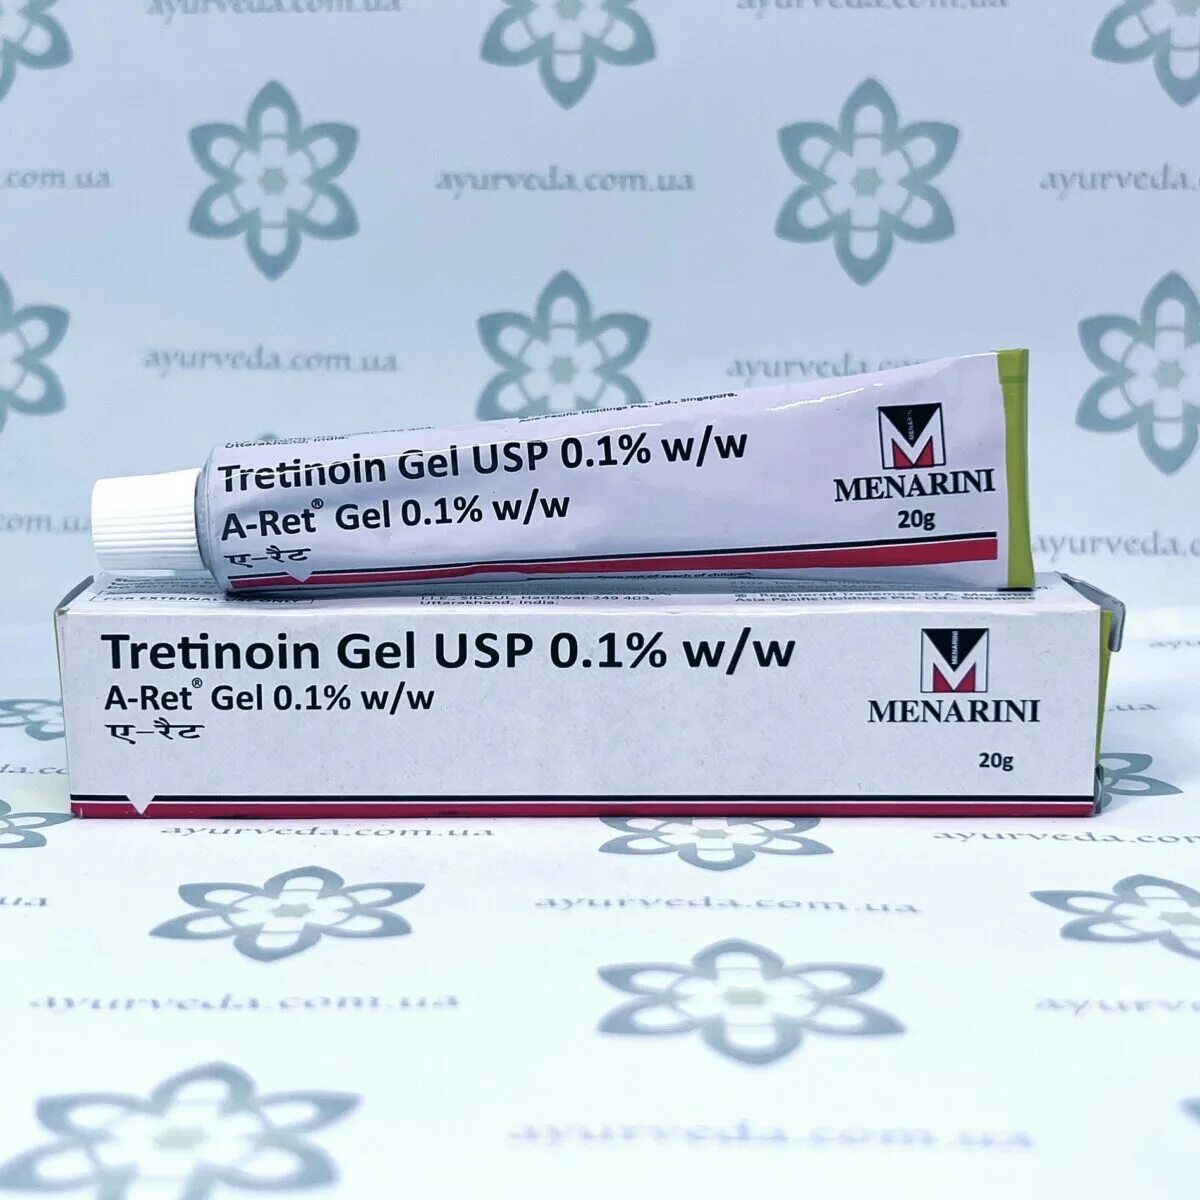 Tretinoin gel ups menarini отзывы